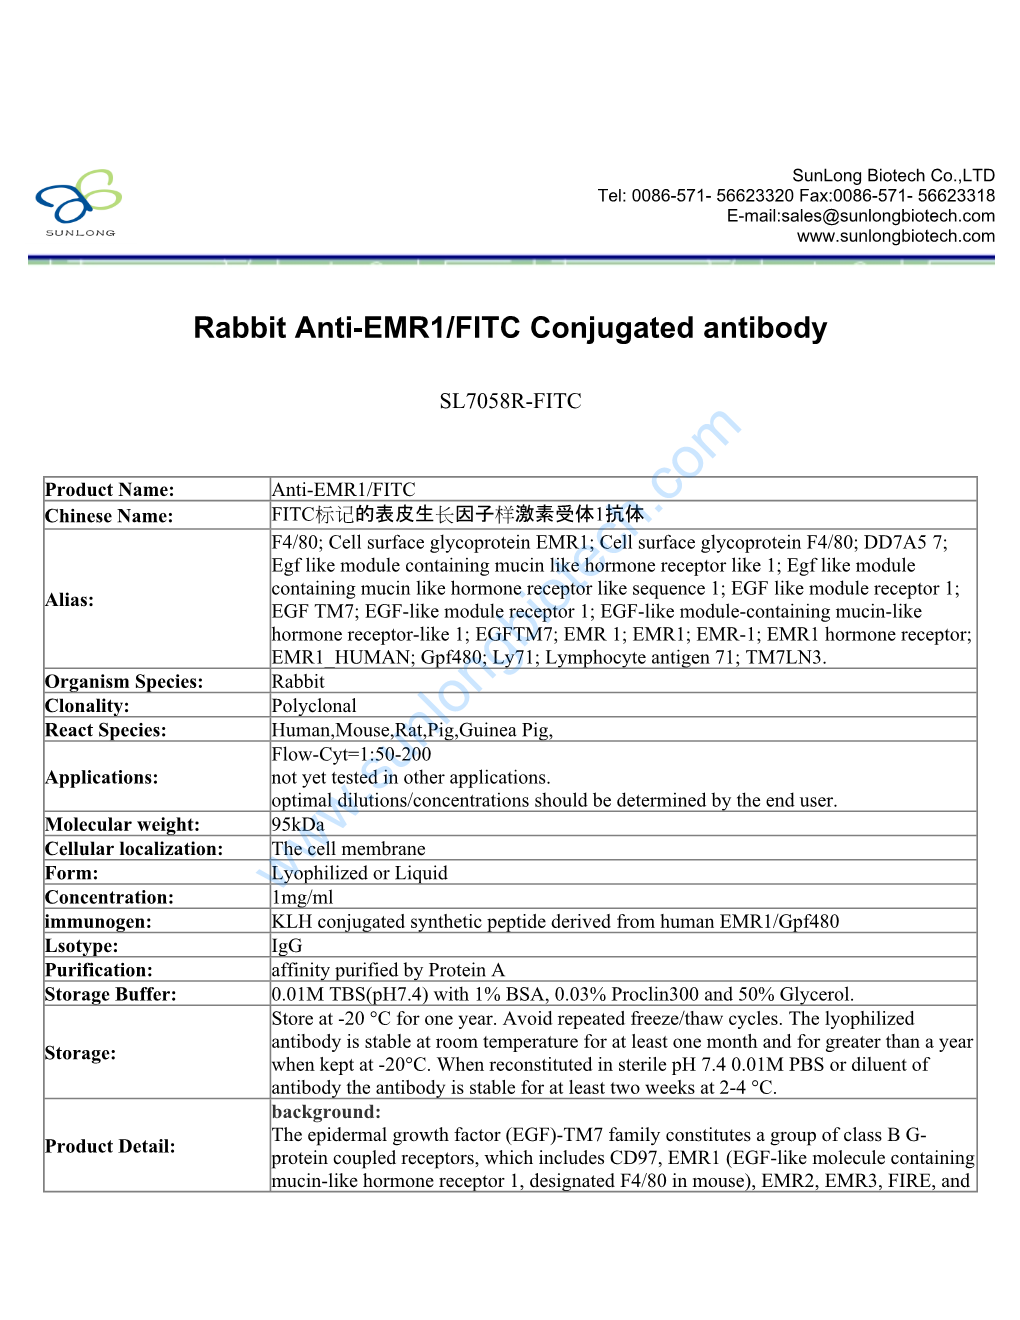 Rabbit Anti-EMR1/FITC Conjugated Antibody